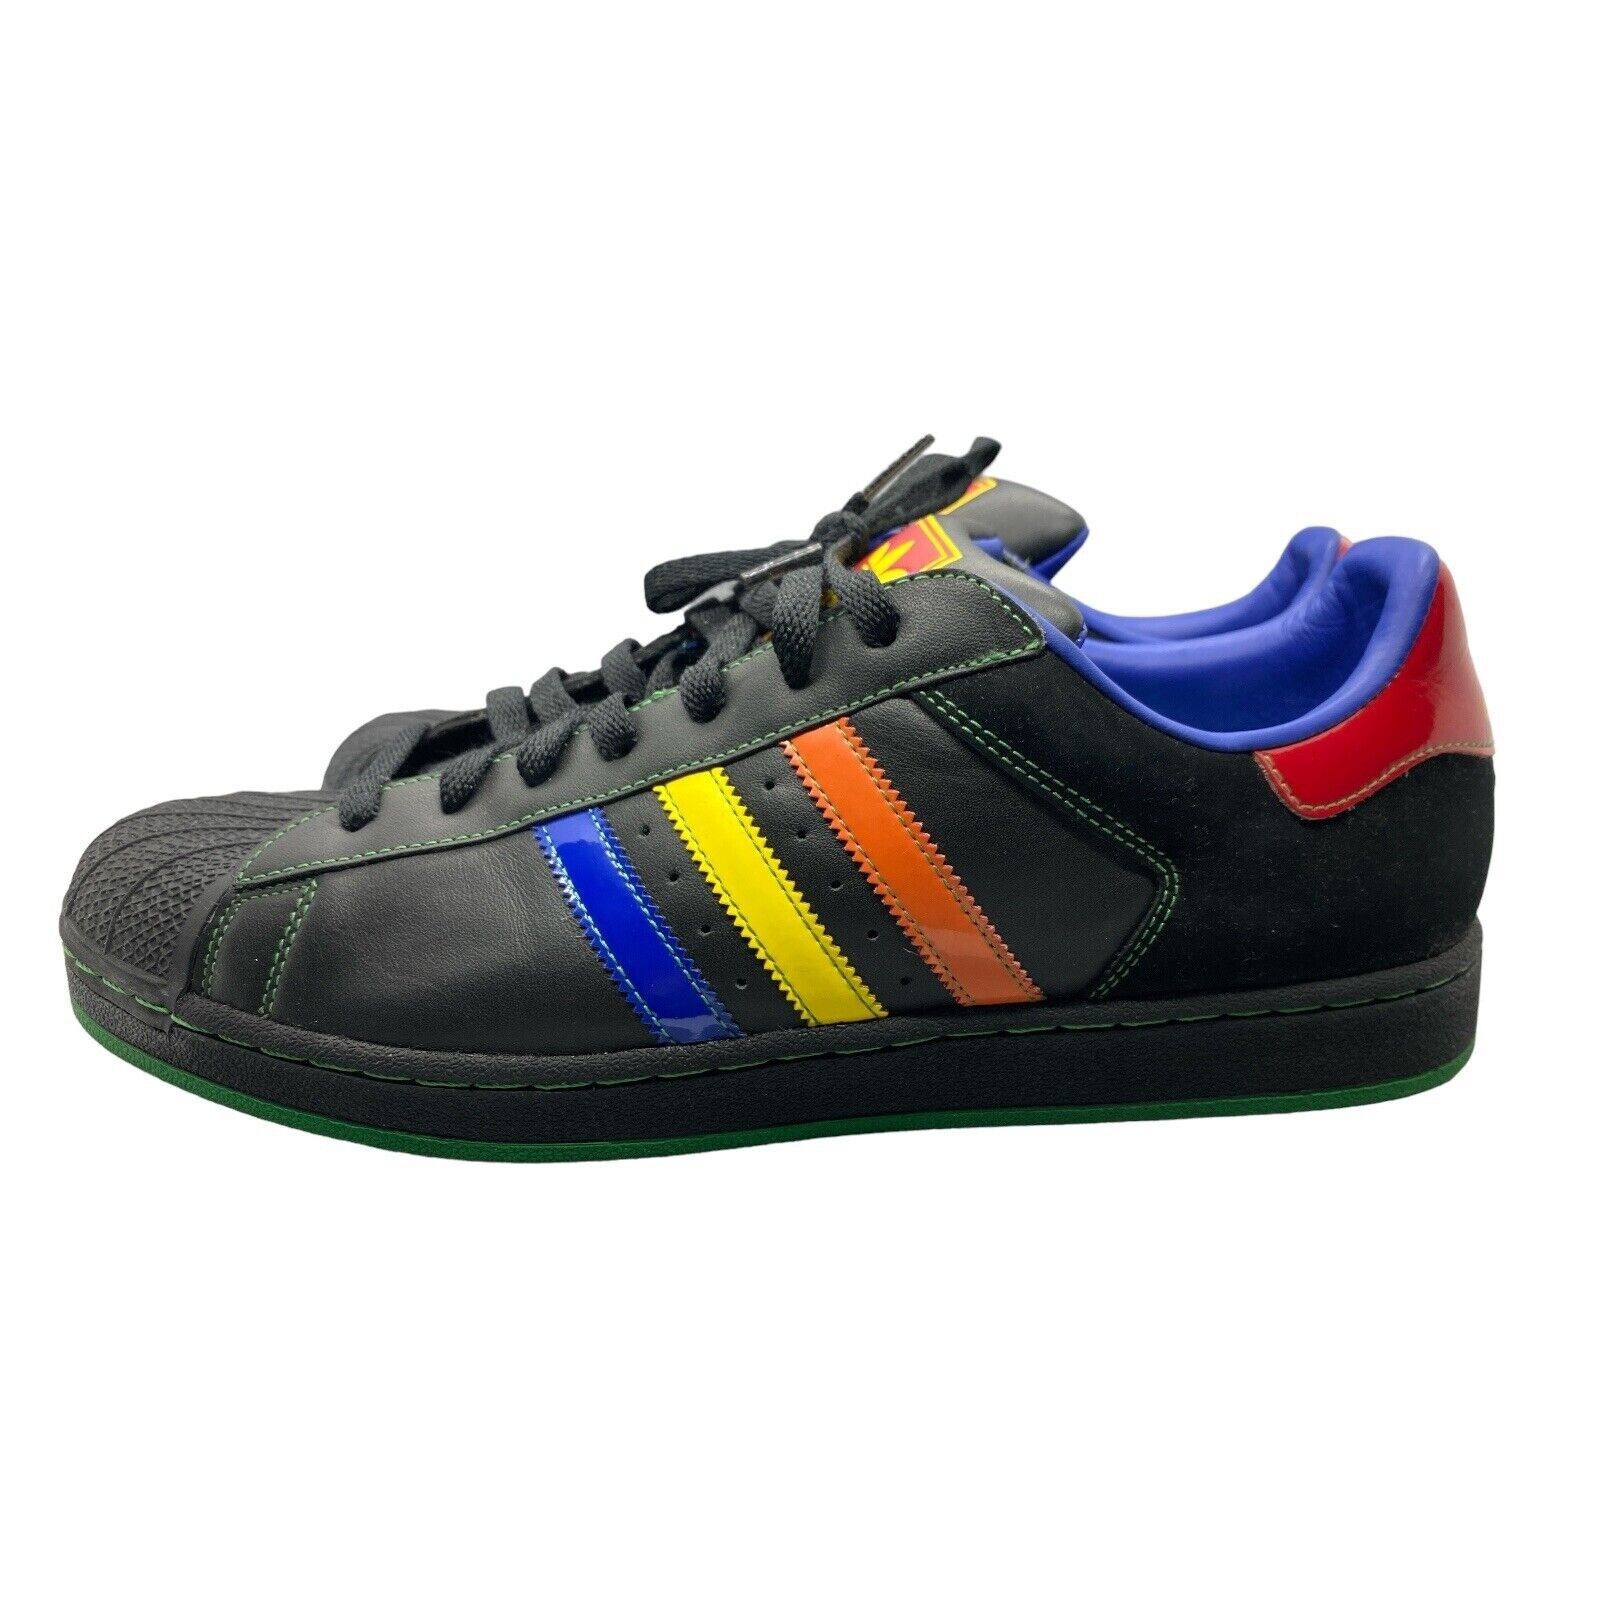 Adidas ADIDAS Original Superstar 2 II CB Black Shell Mens Sneakers Size US 13 / EU 46 - 5 Thumbnail